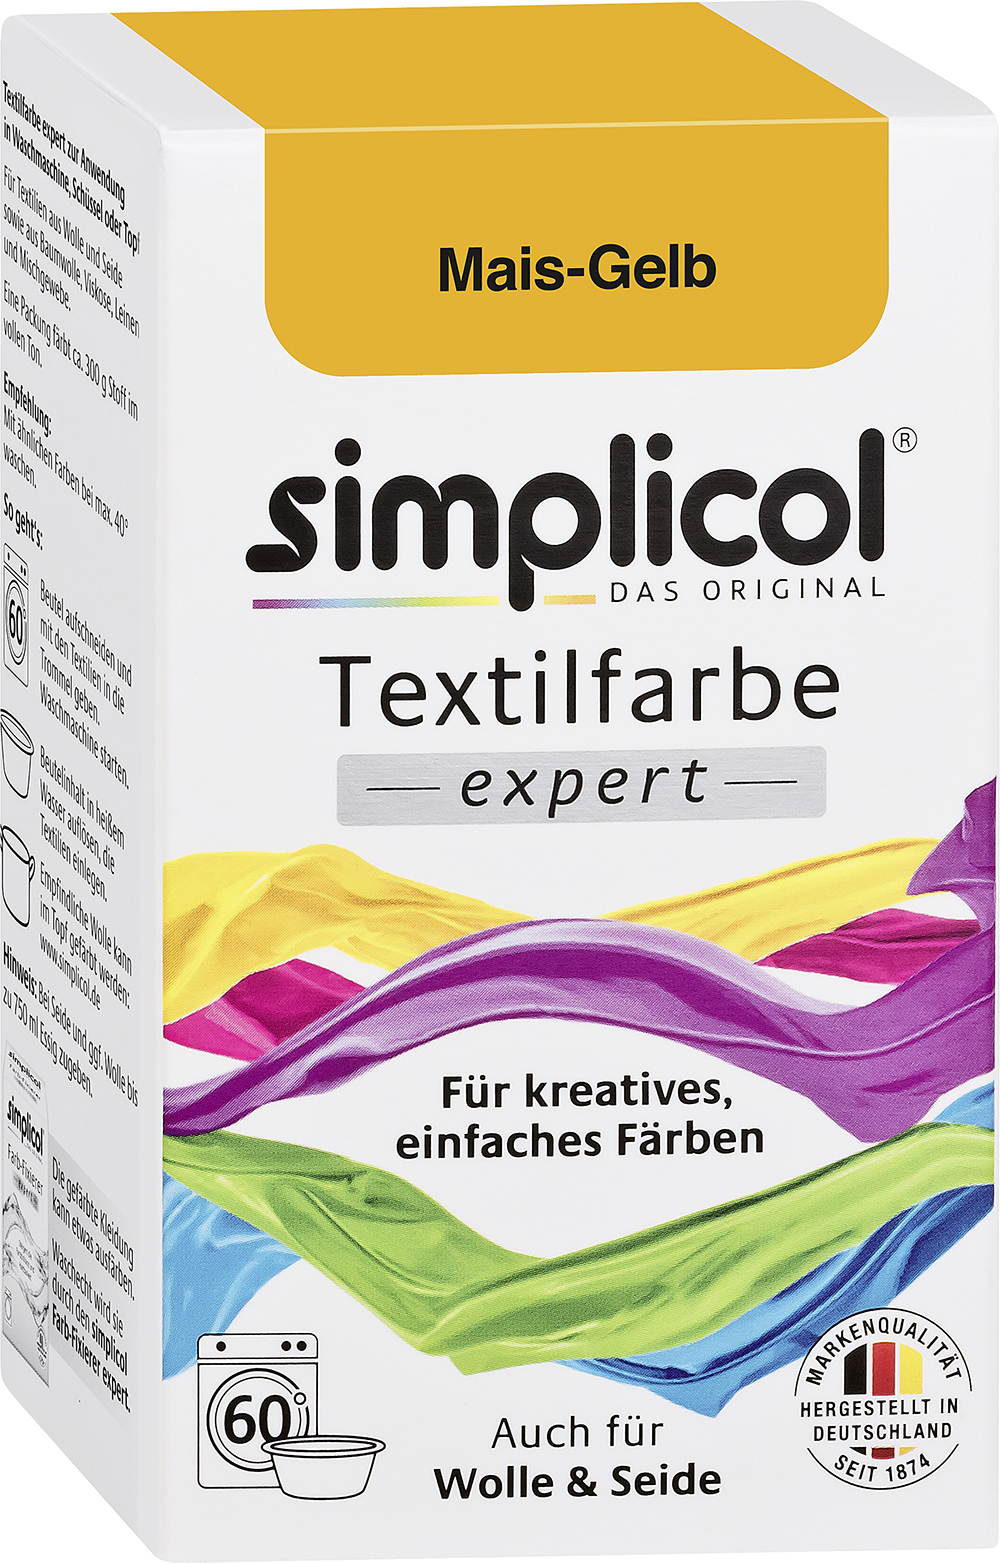 SIMPLICOL Textilfarbe Expert 150g maisgelb